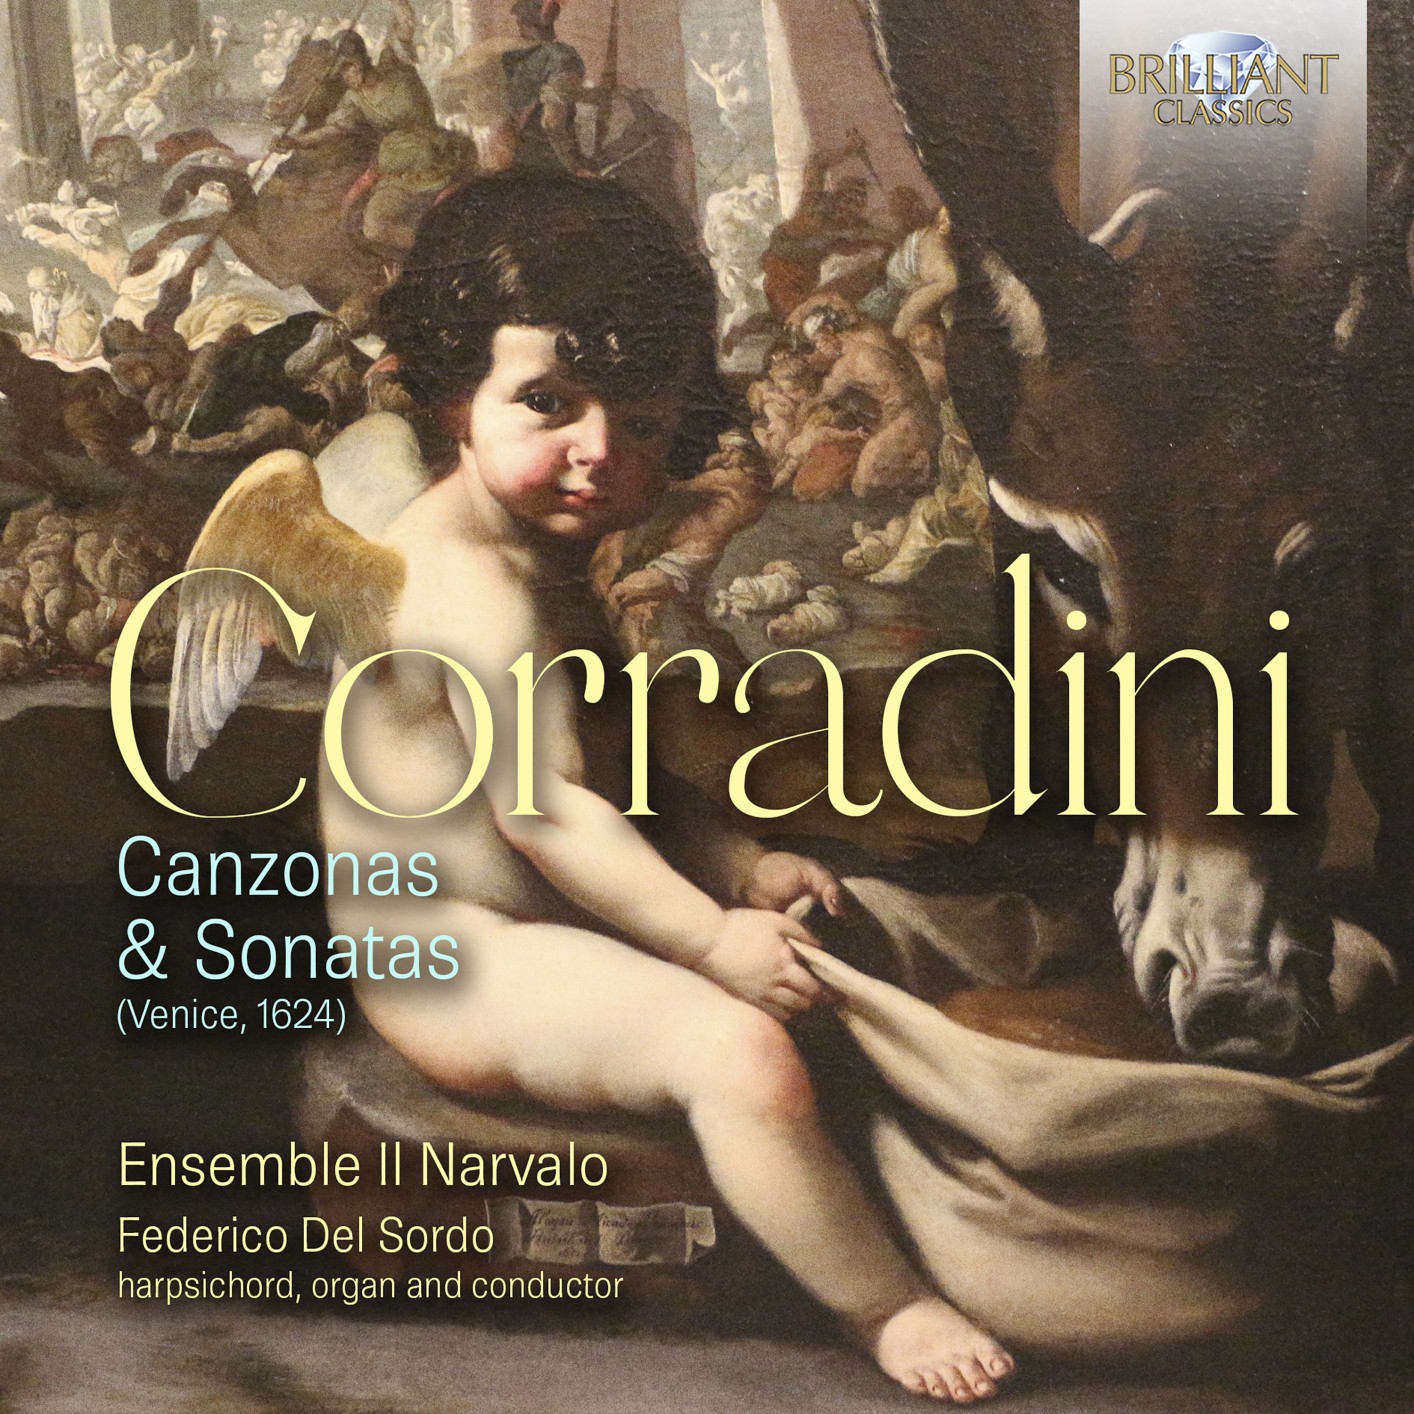 Corradini - Canzonas and Sonatas, 1624 - Ens. Il Narvalo